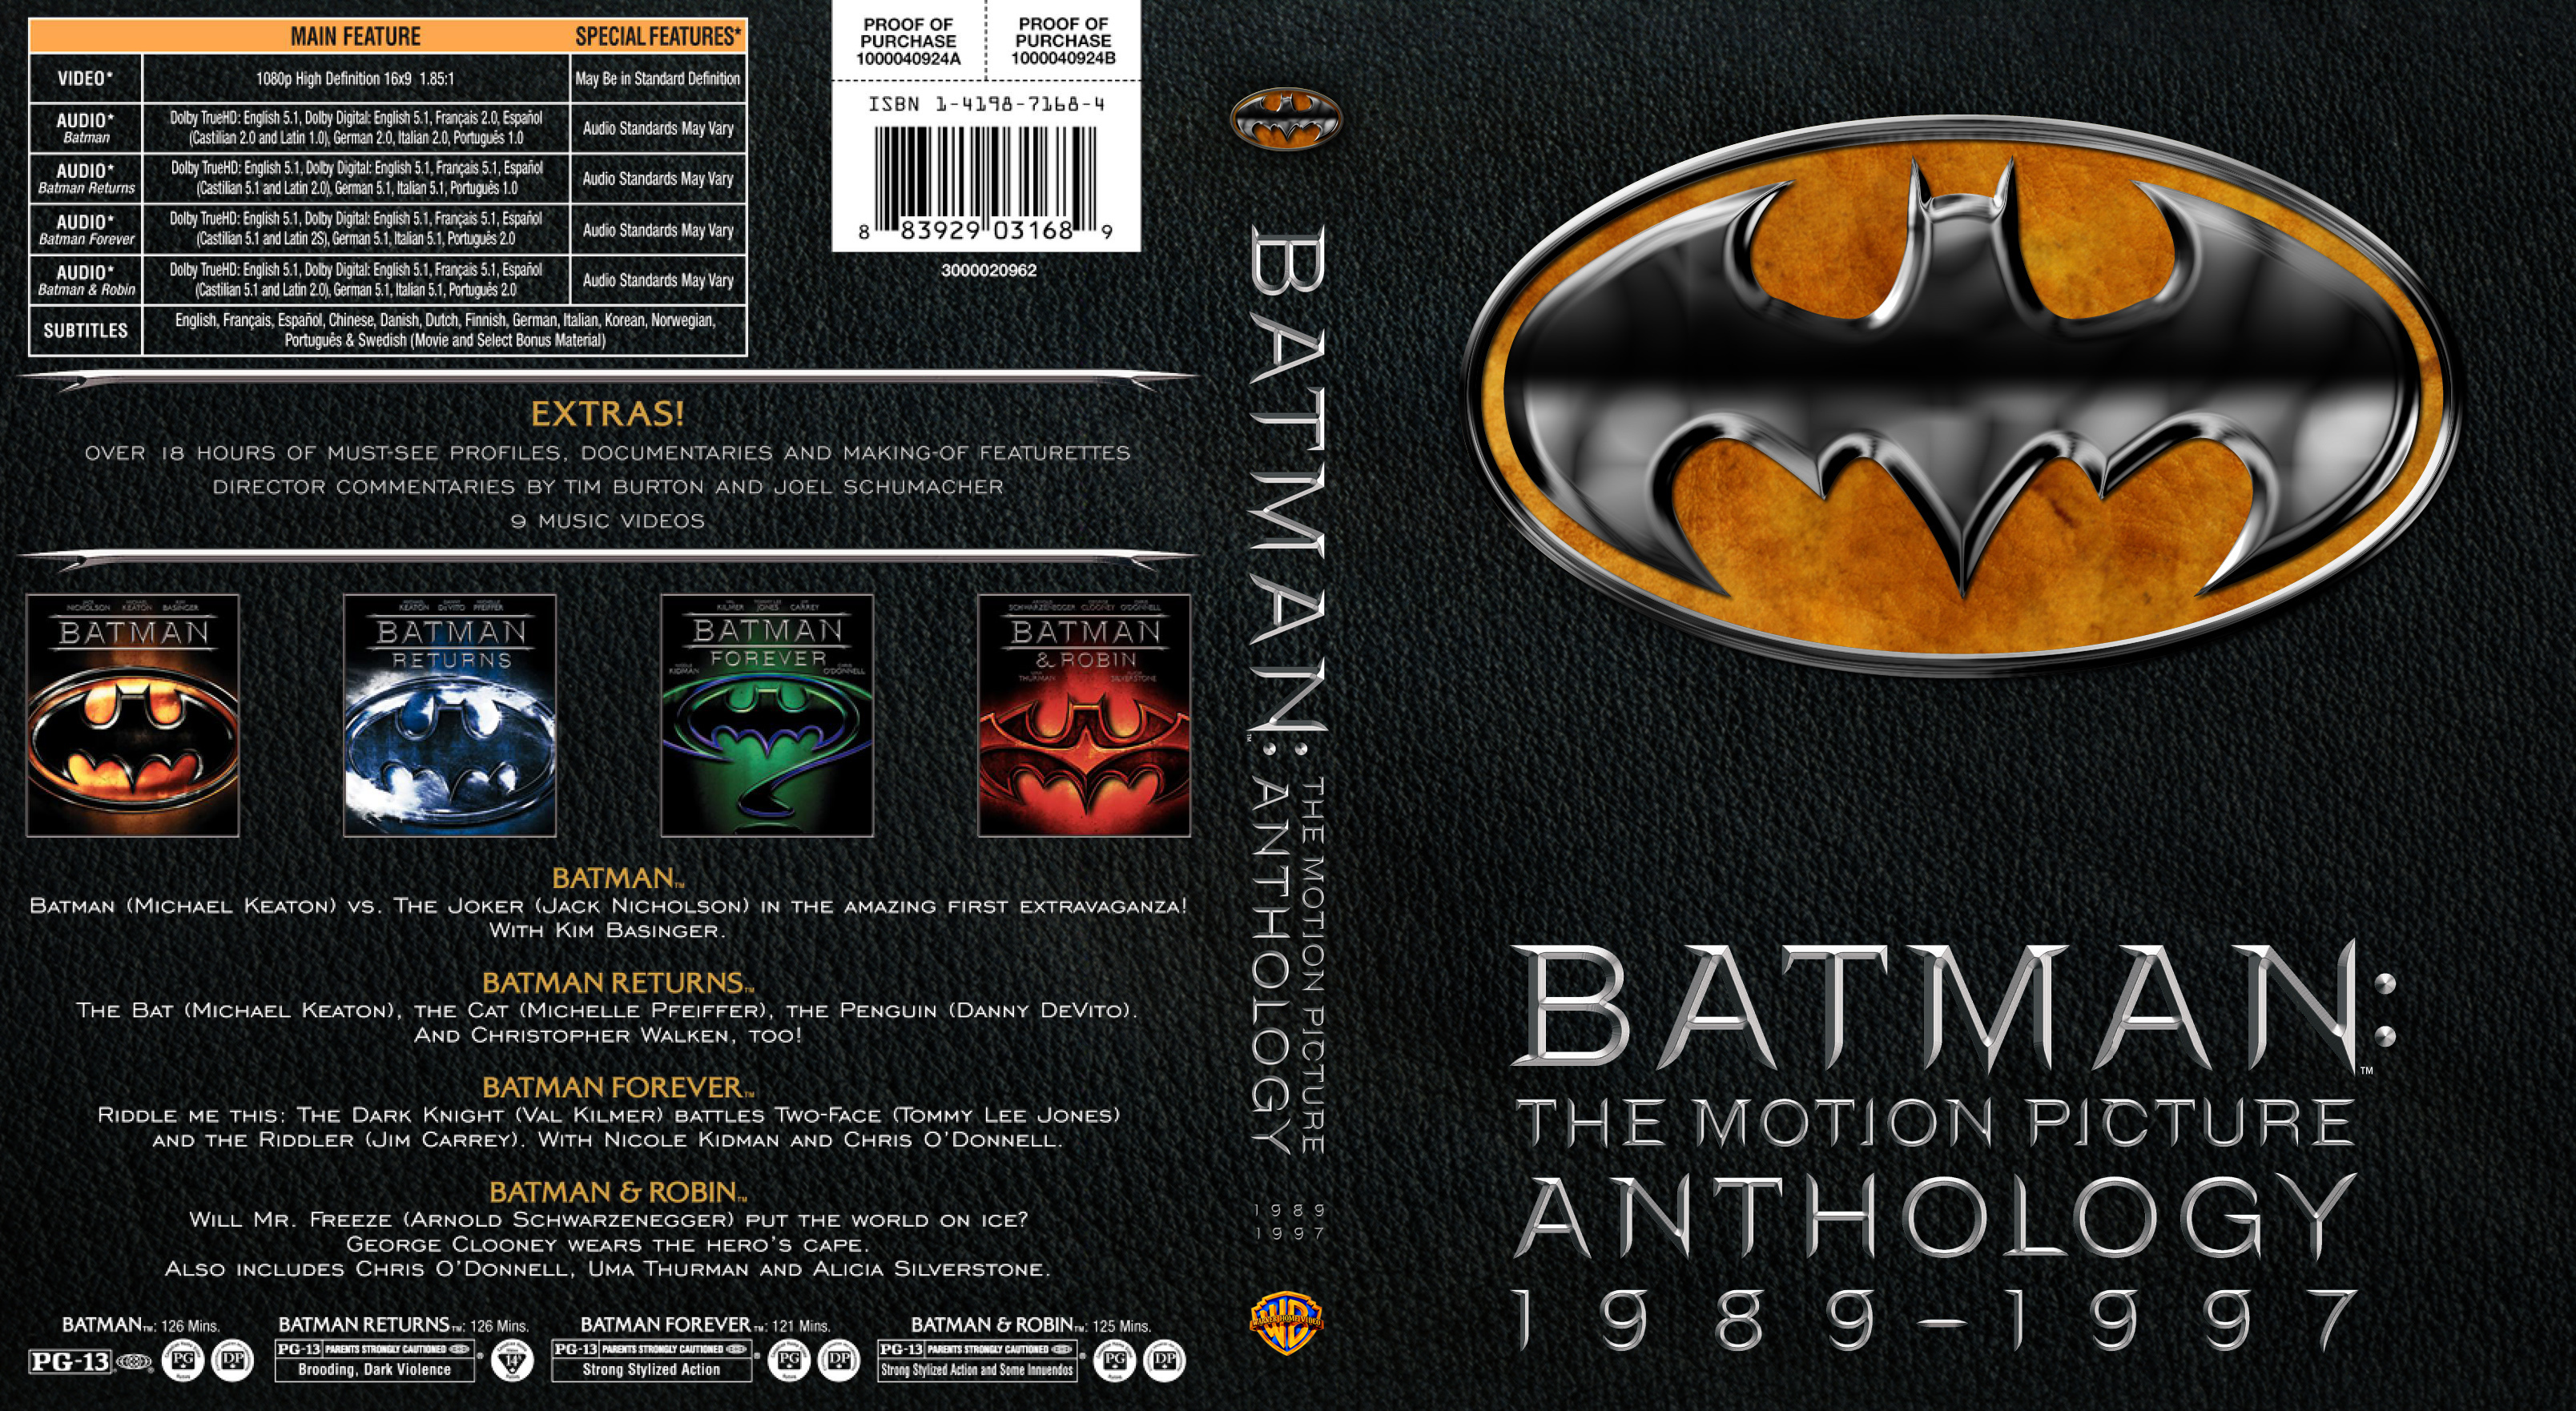 Jaquette DVD Batman anthology (BLU-RAY) custom